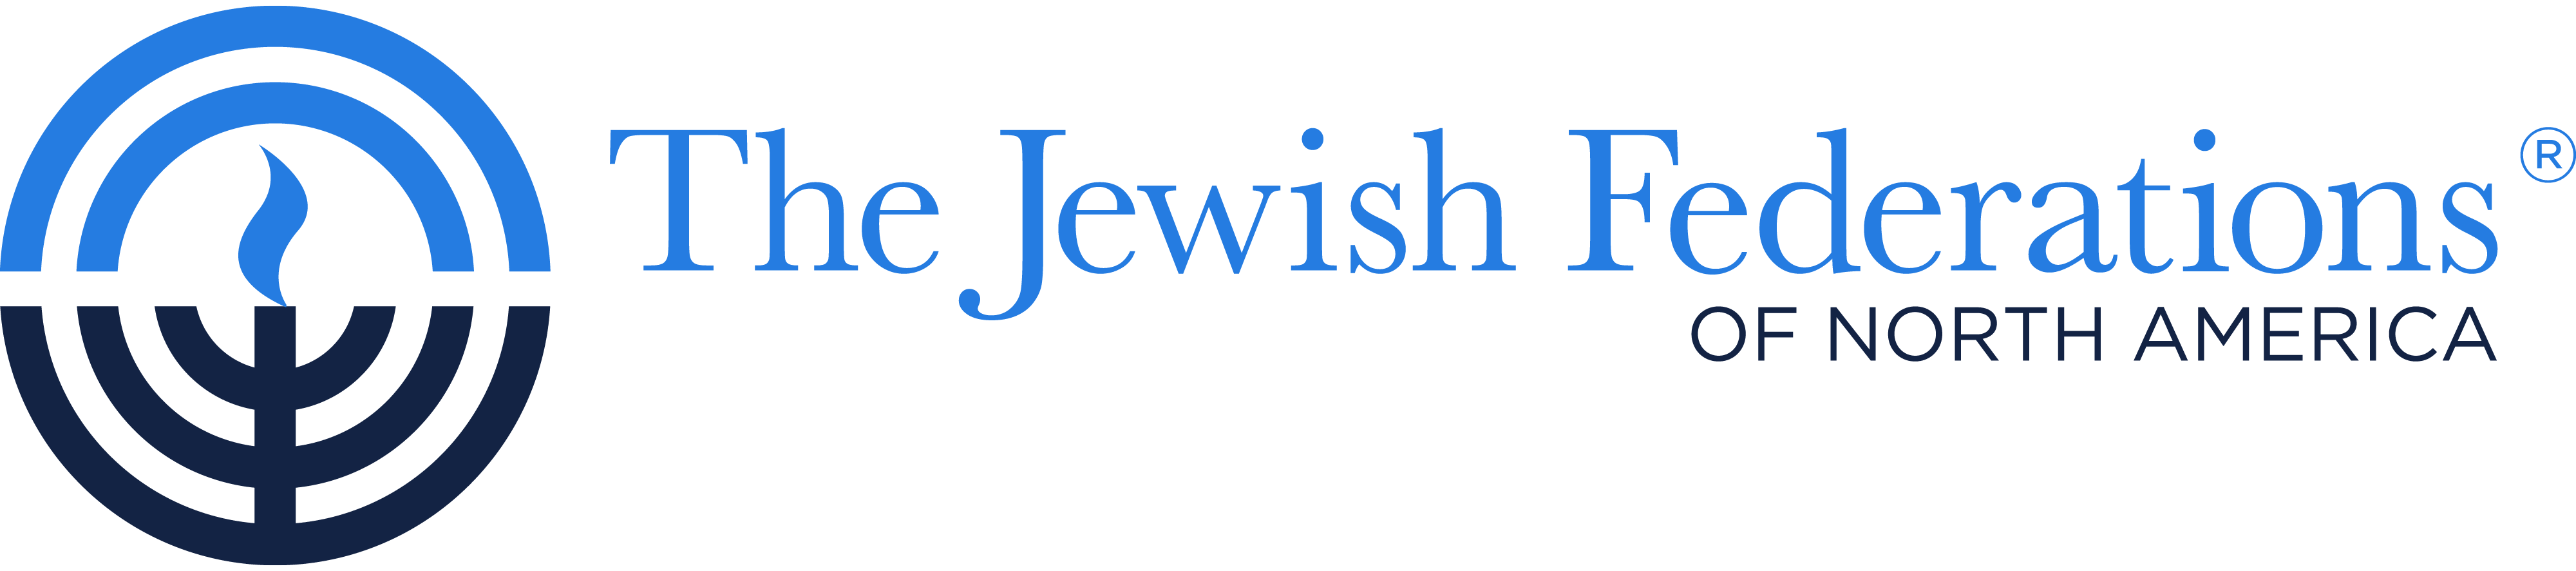 Jewish Federations of North America